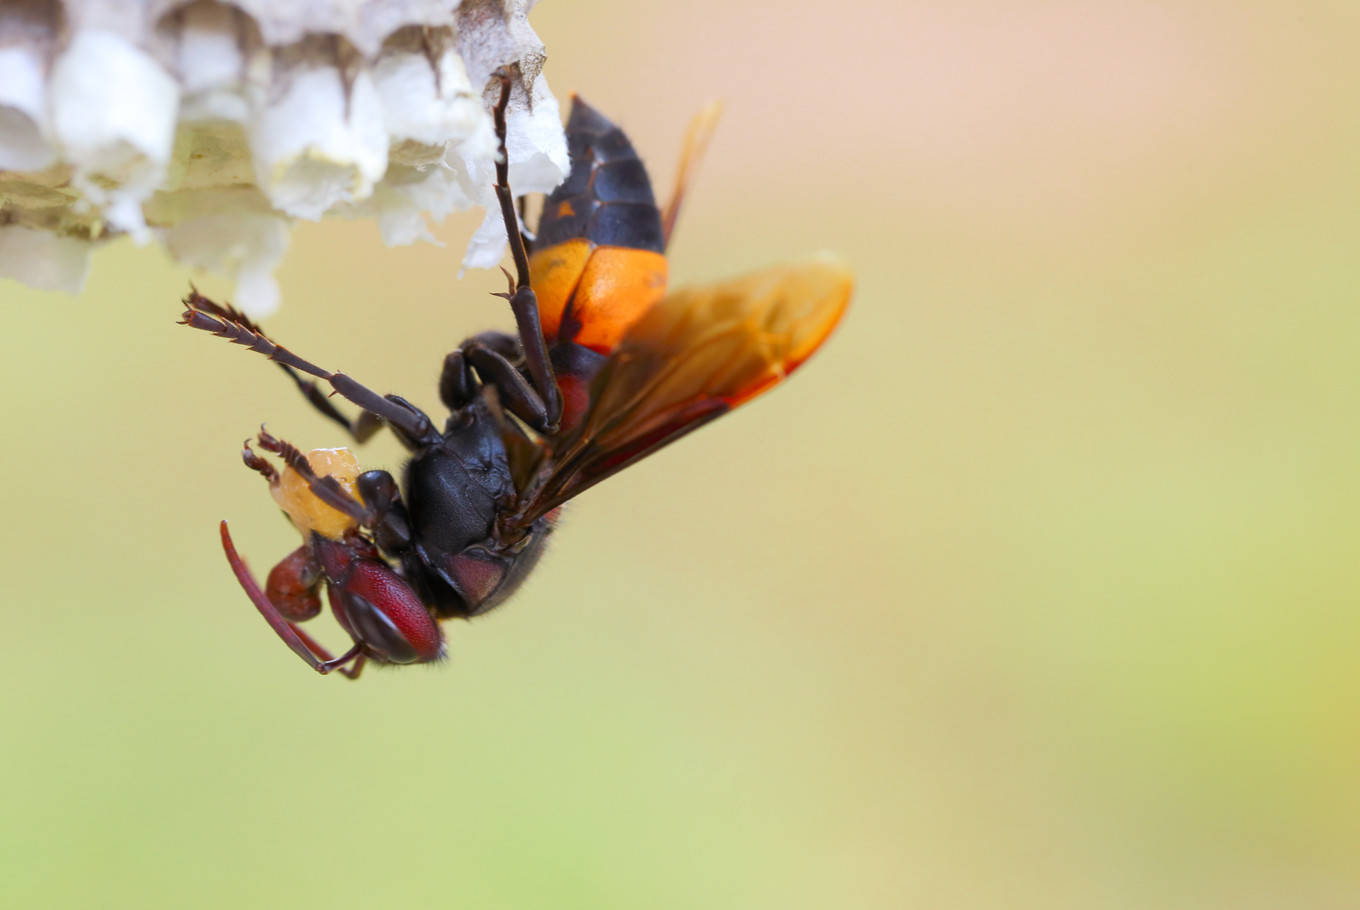 Balita Meninggal, Saudara Terluka Disengat Lebah – Nusantara